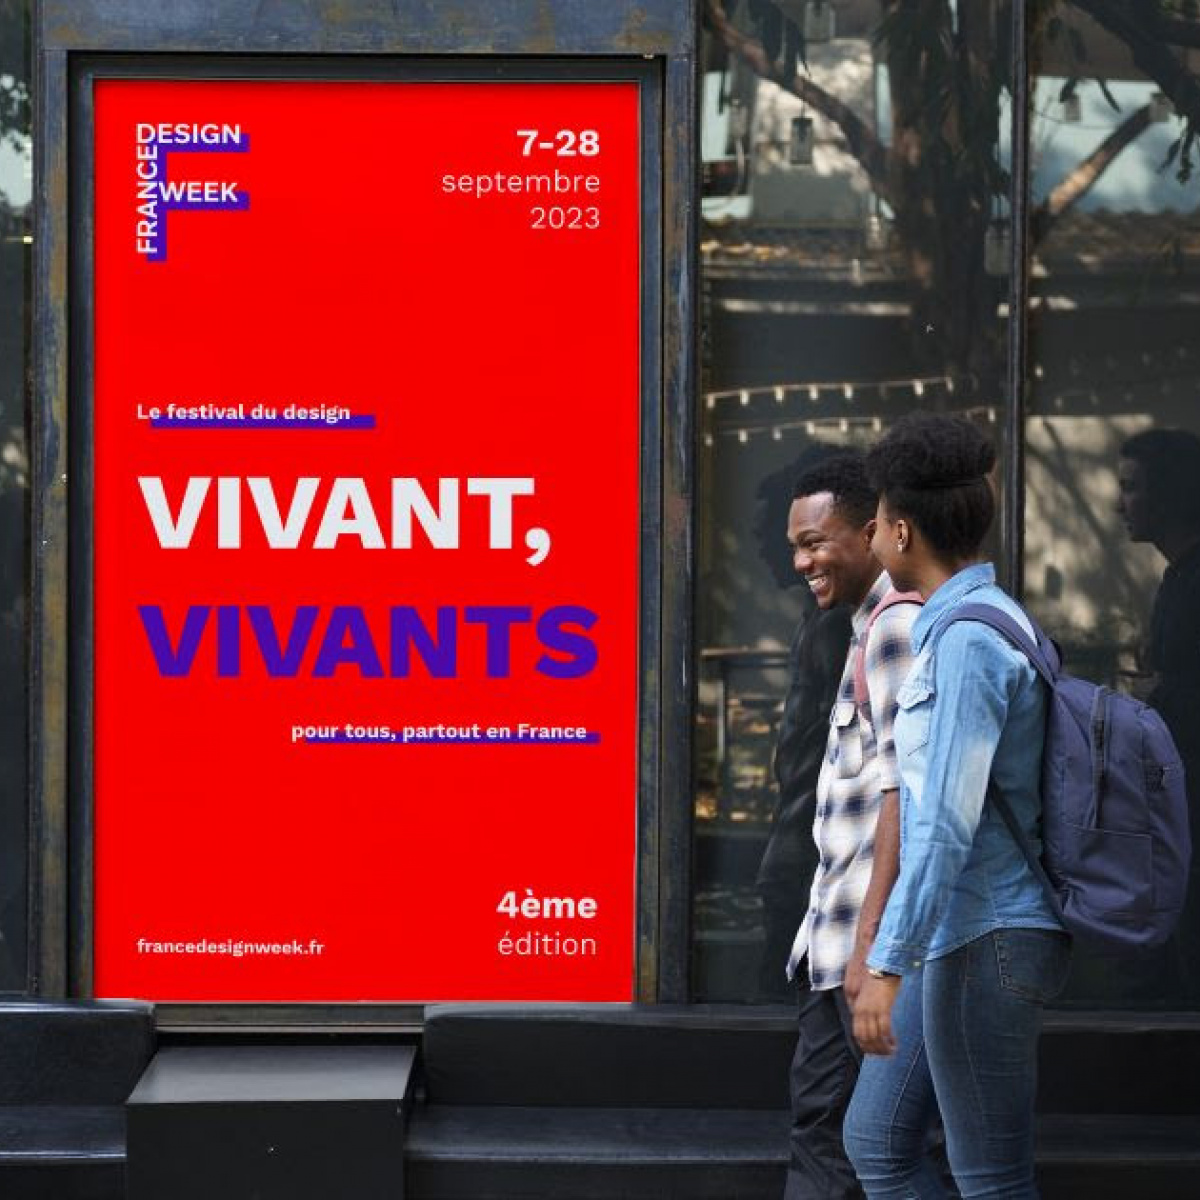 France Design Week 2023 "Vivant, vivants"